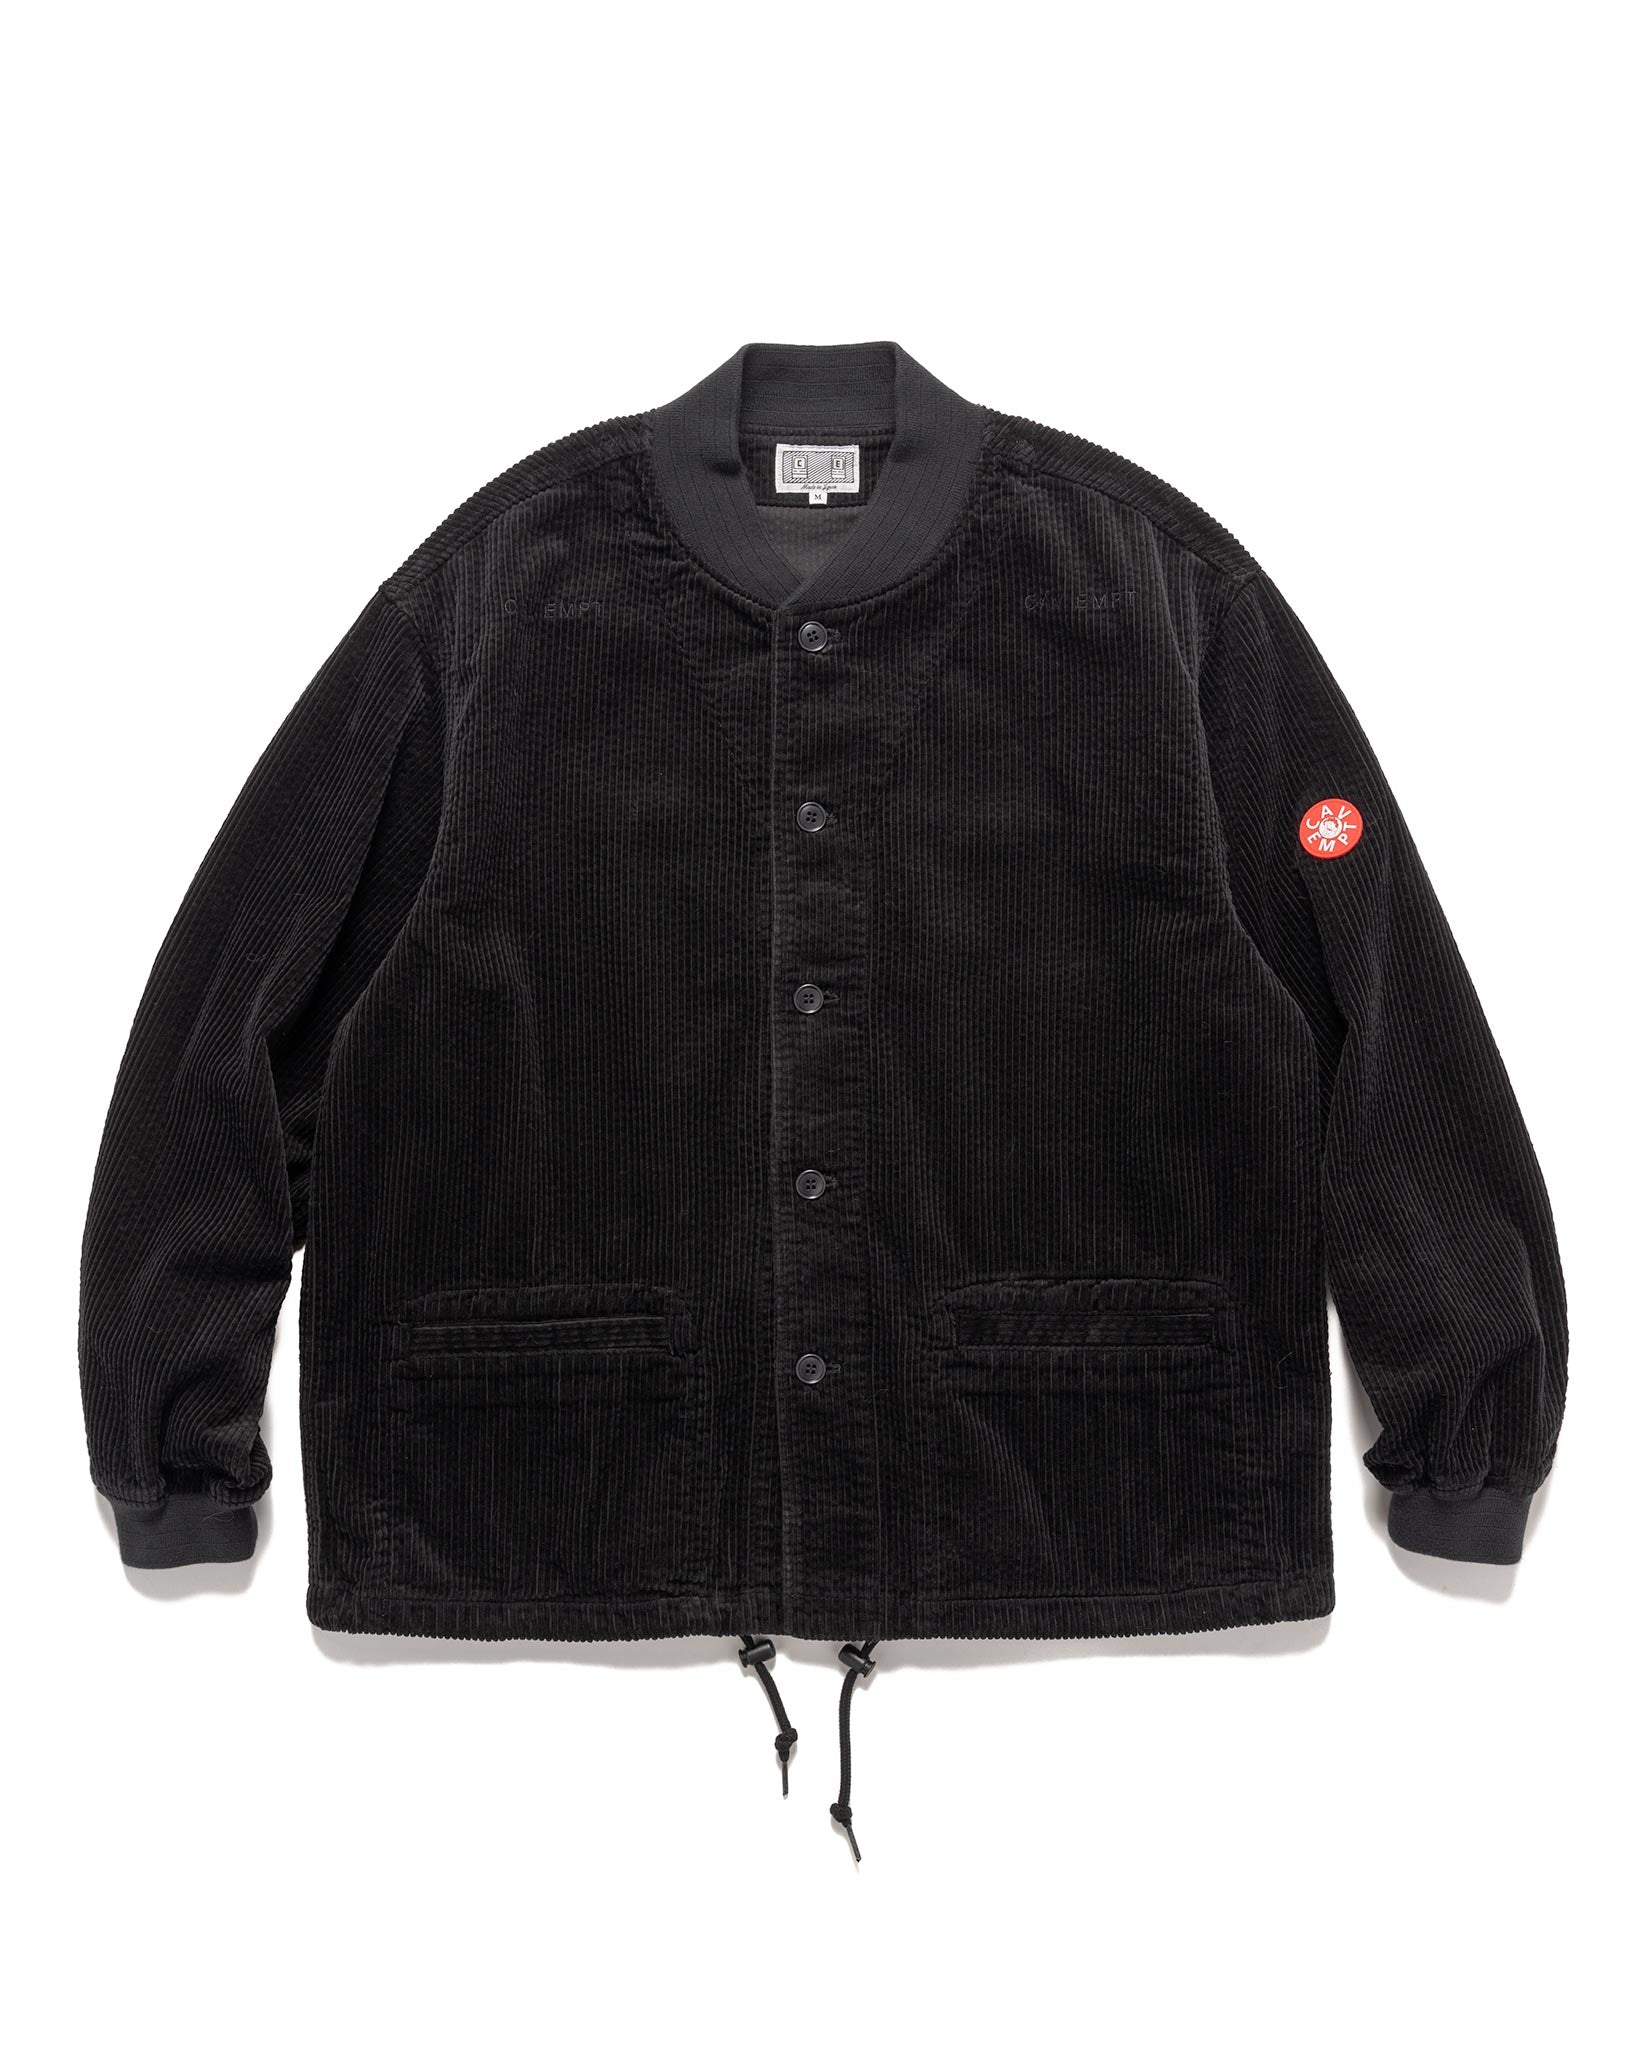 overdye brushed cotton button jacket charcoal $ 555 . 00 cad size s m l ...